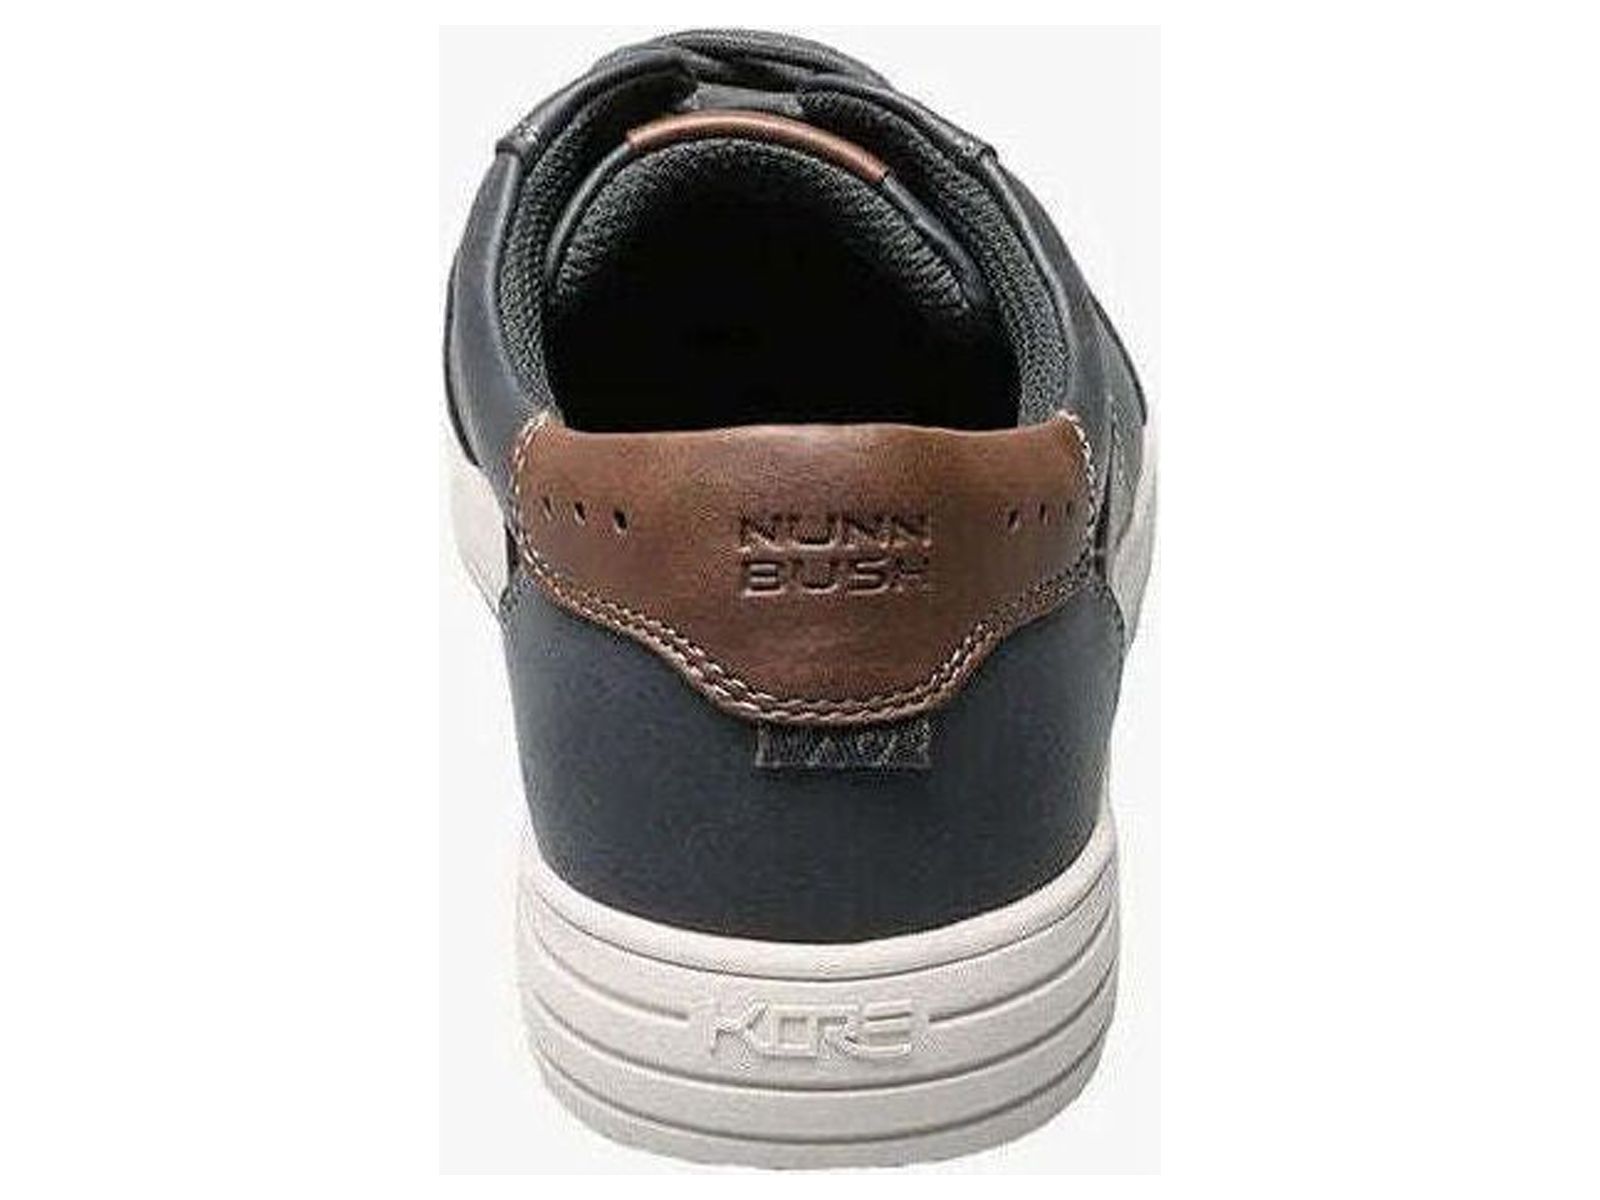 Nunn Bush KORE City Walk Lace To Toe Oxford Walking Sneaker Navy 84819-410 - image 3 of 10